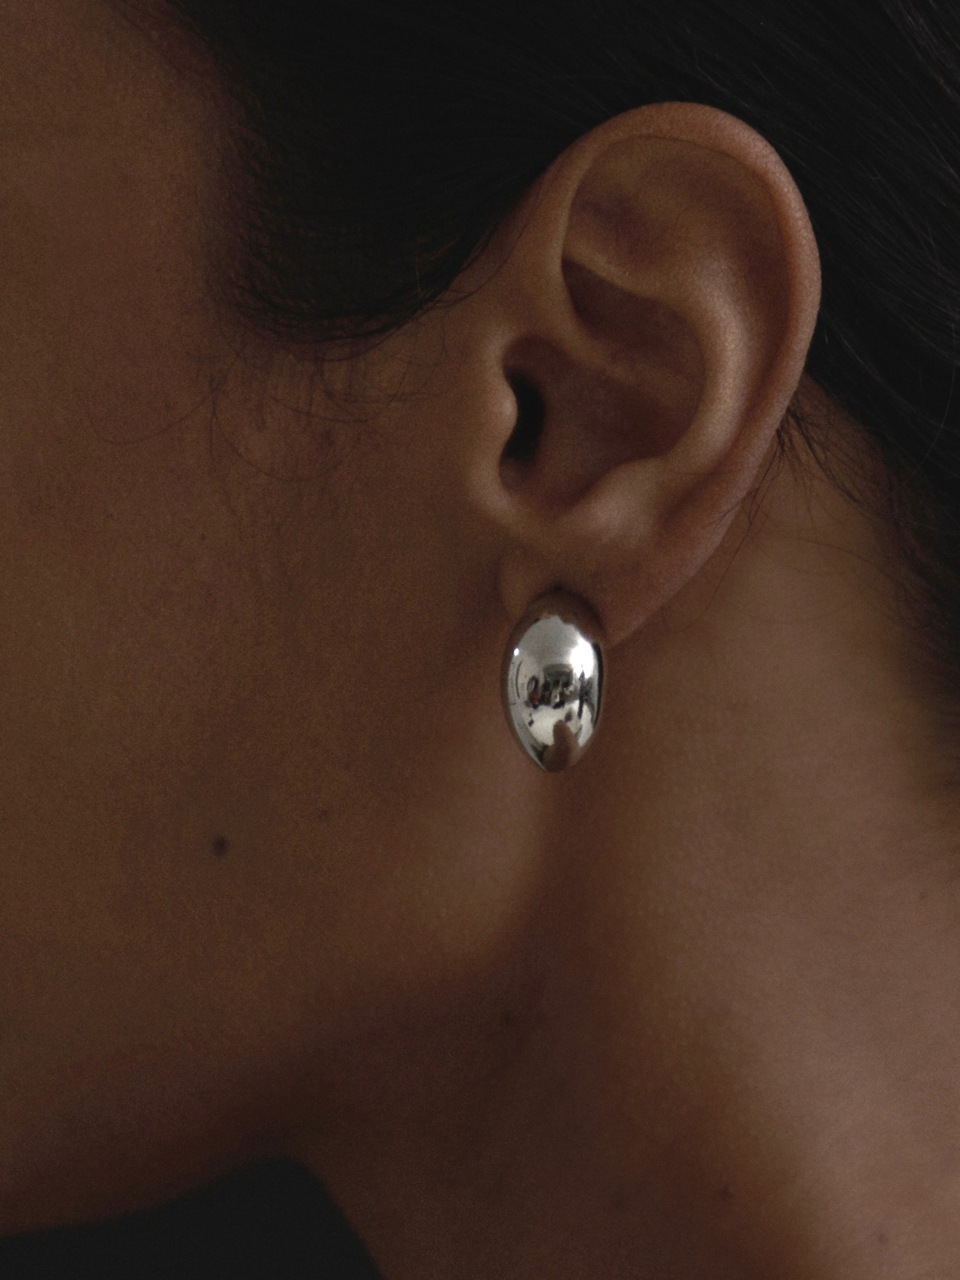 Pistachio earring